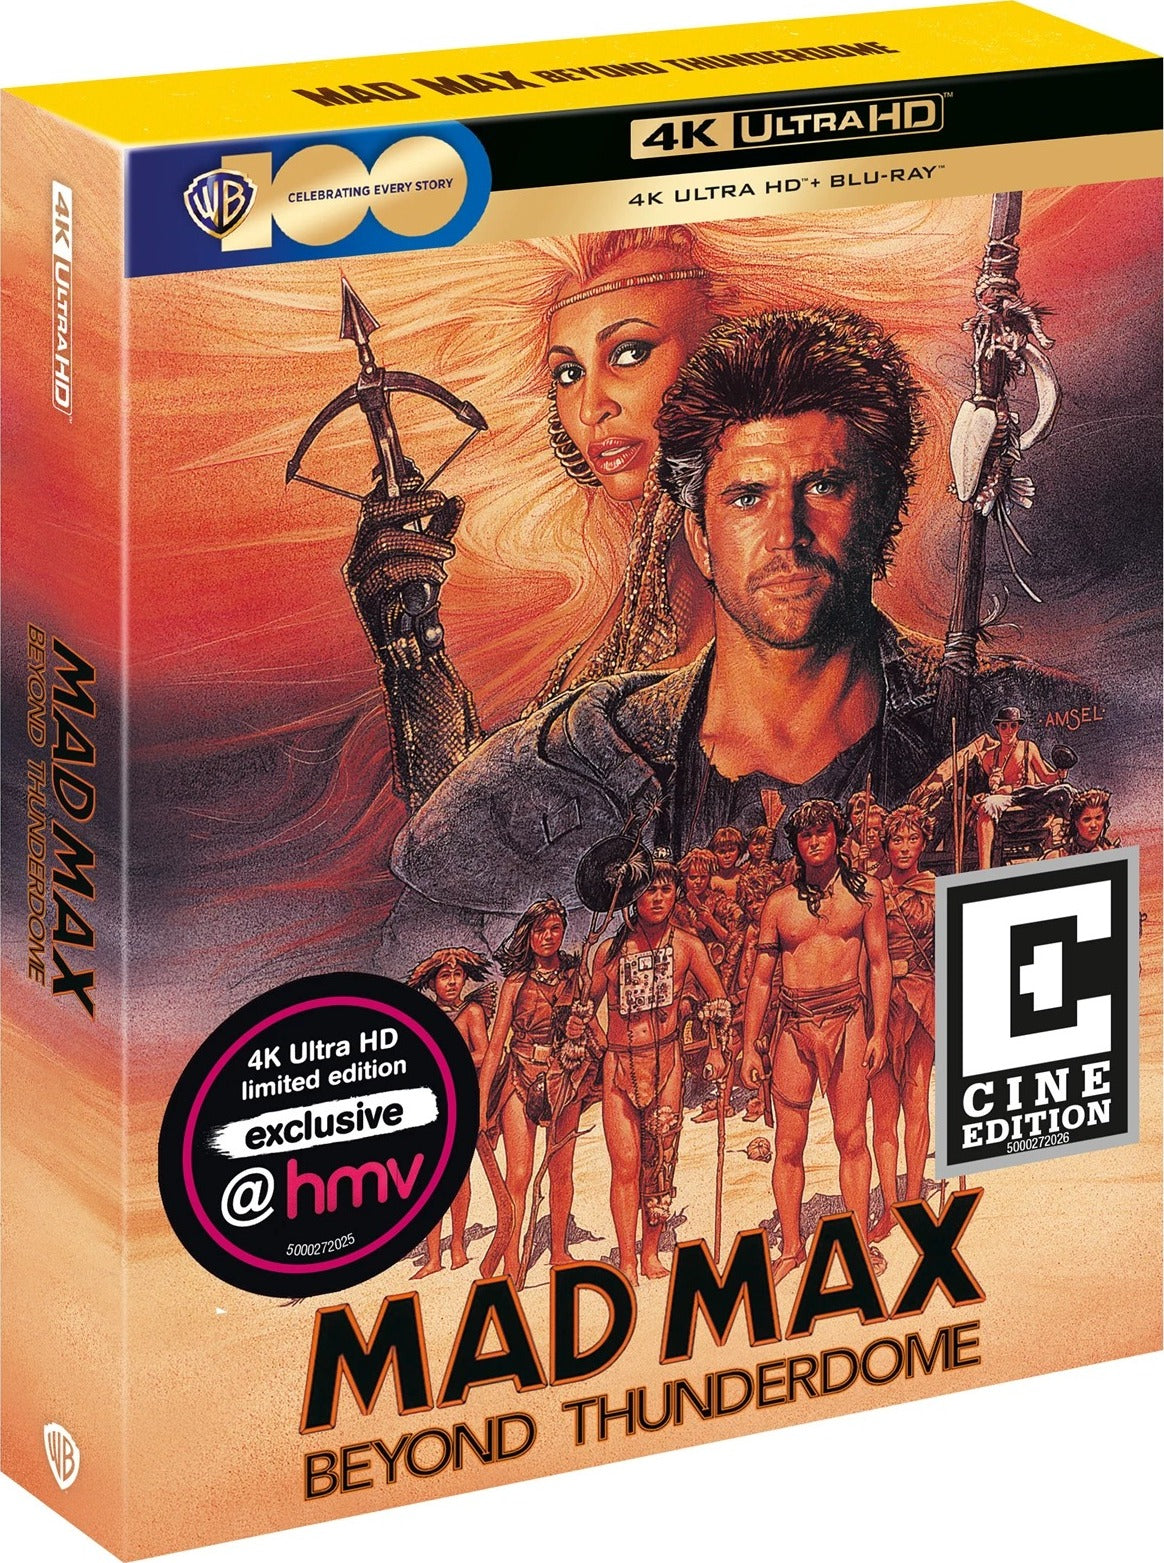 Mad Max: Beyond Thunderdome [hmv Cine Edition] [4K UHD] [UK]